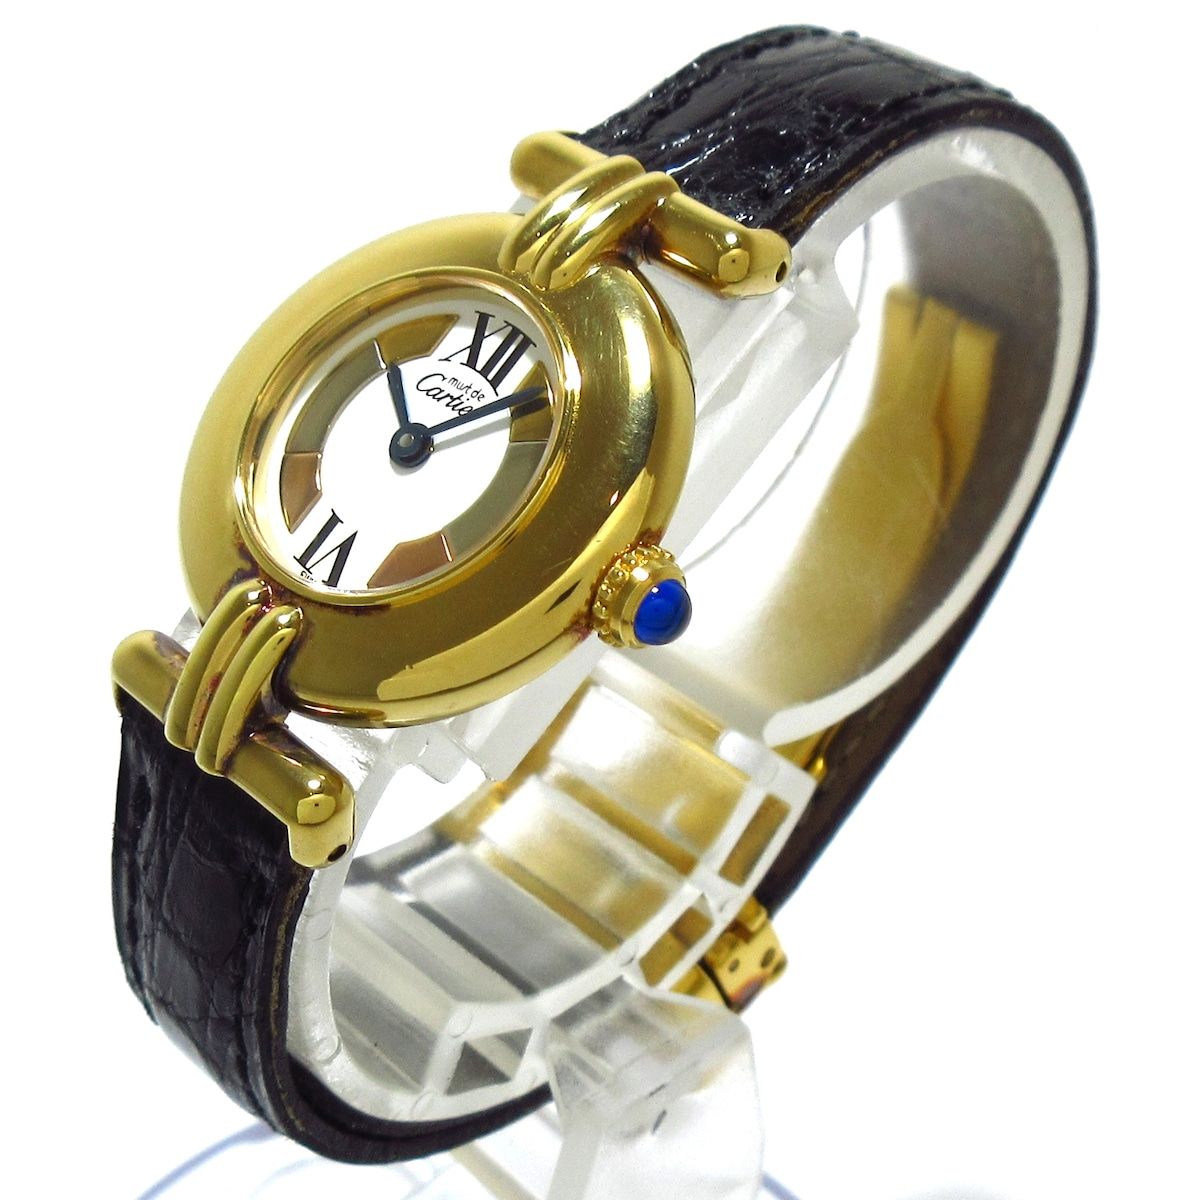 Cartier(カルティエ) 腕時計 マストコリゼ 590002 レディース 革ベルト 